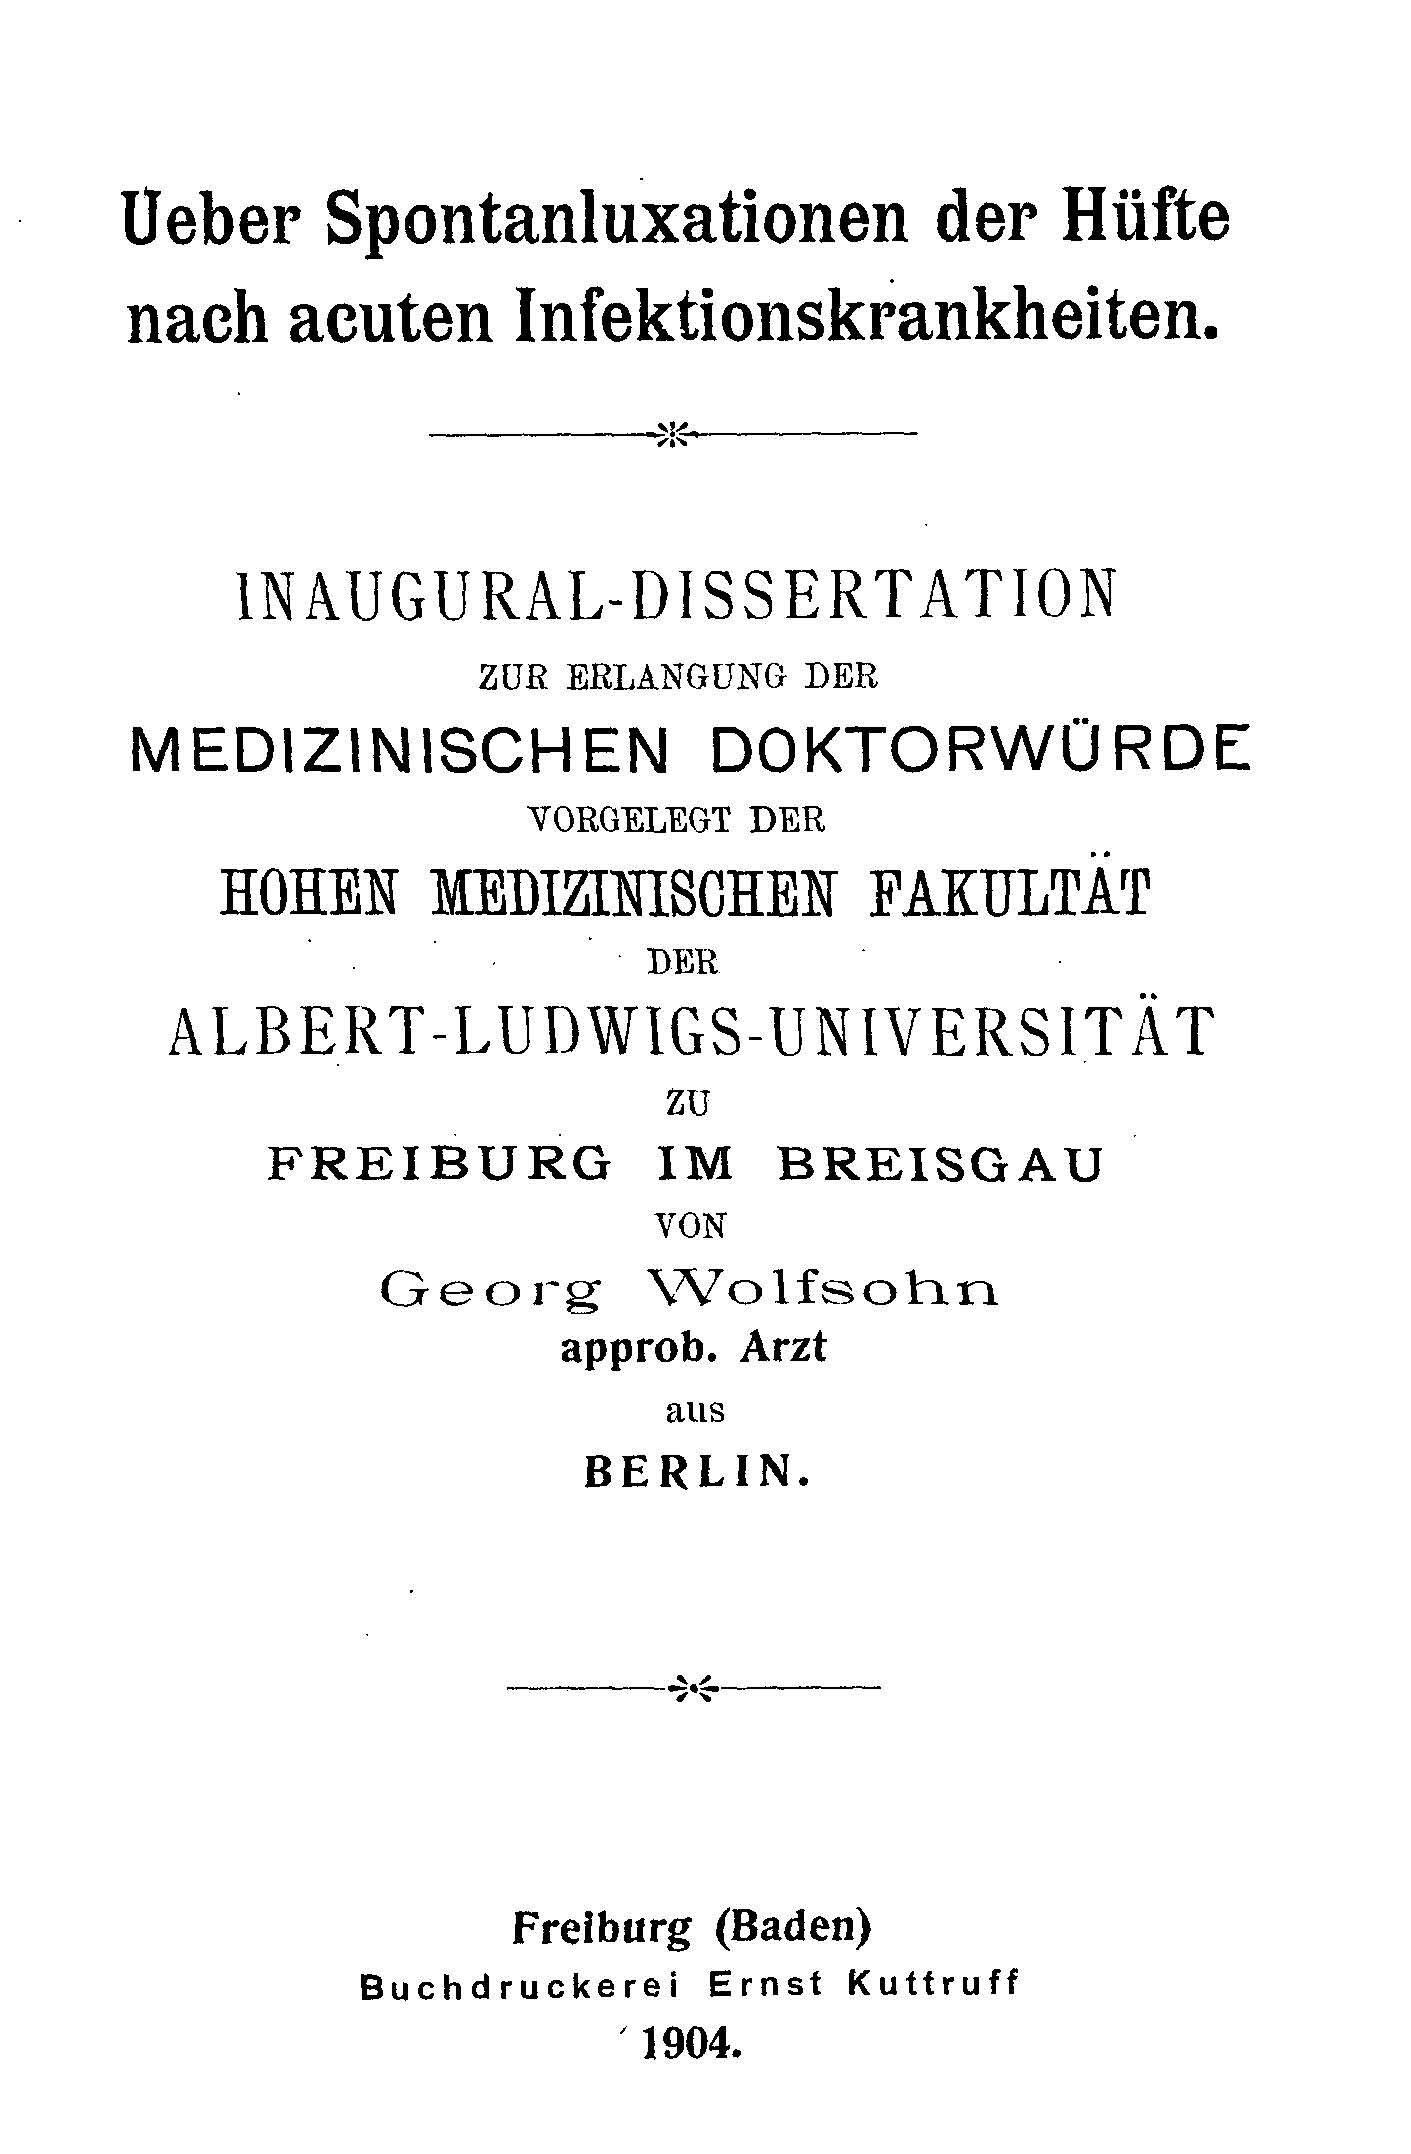 Dissertation 1904, Archiv HJe